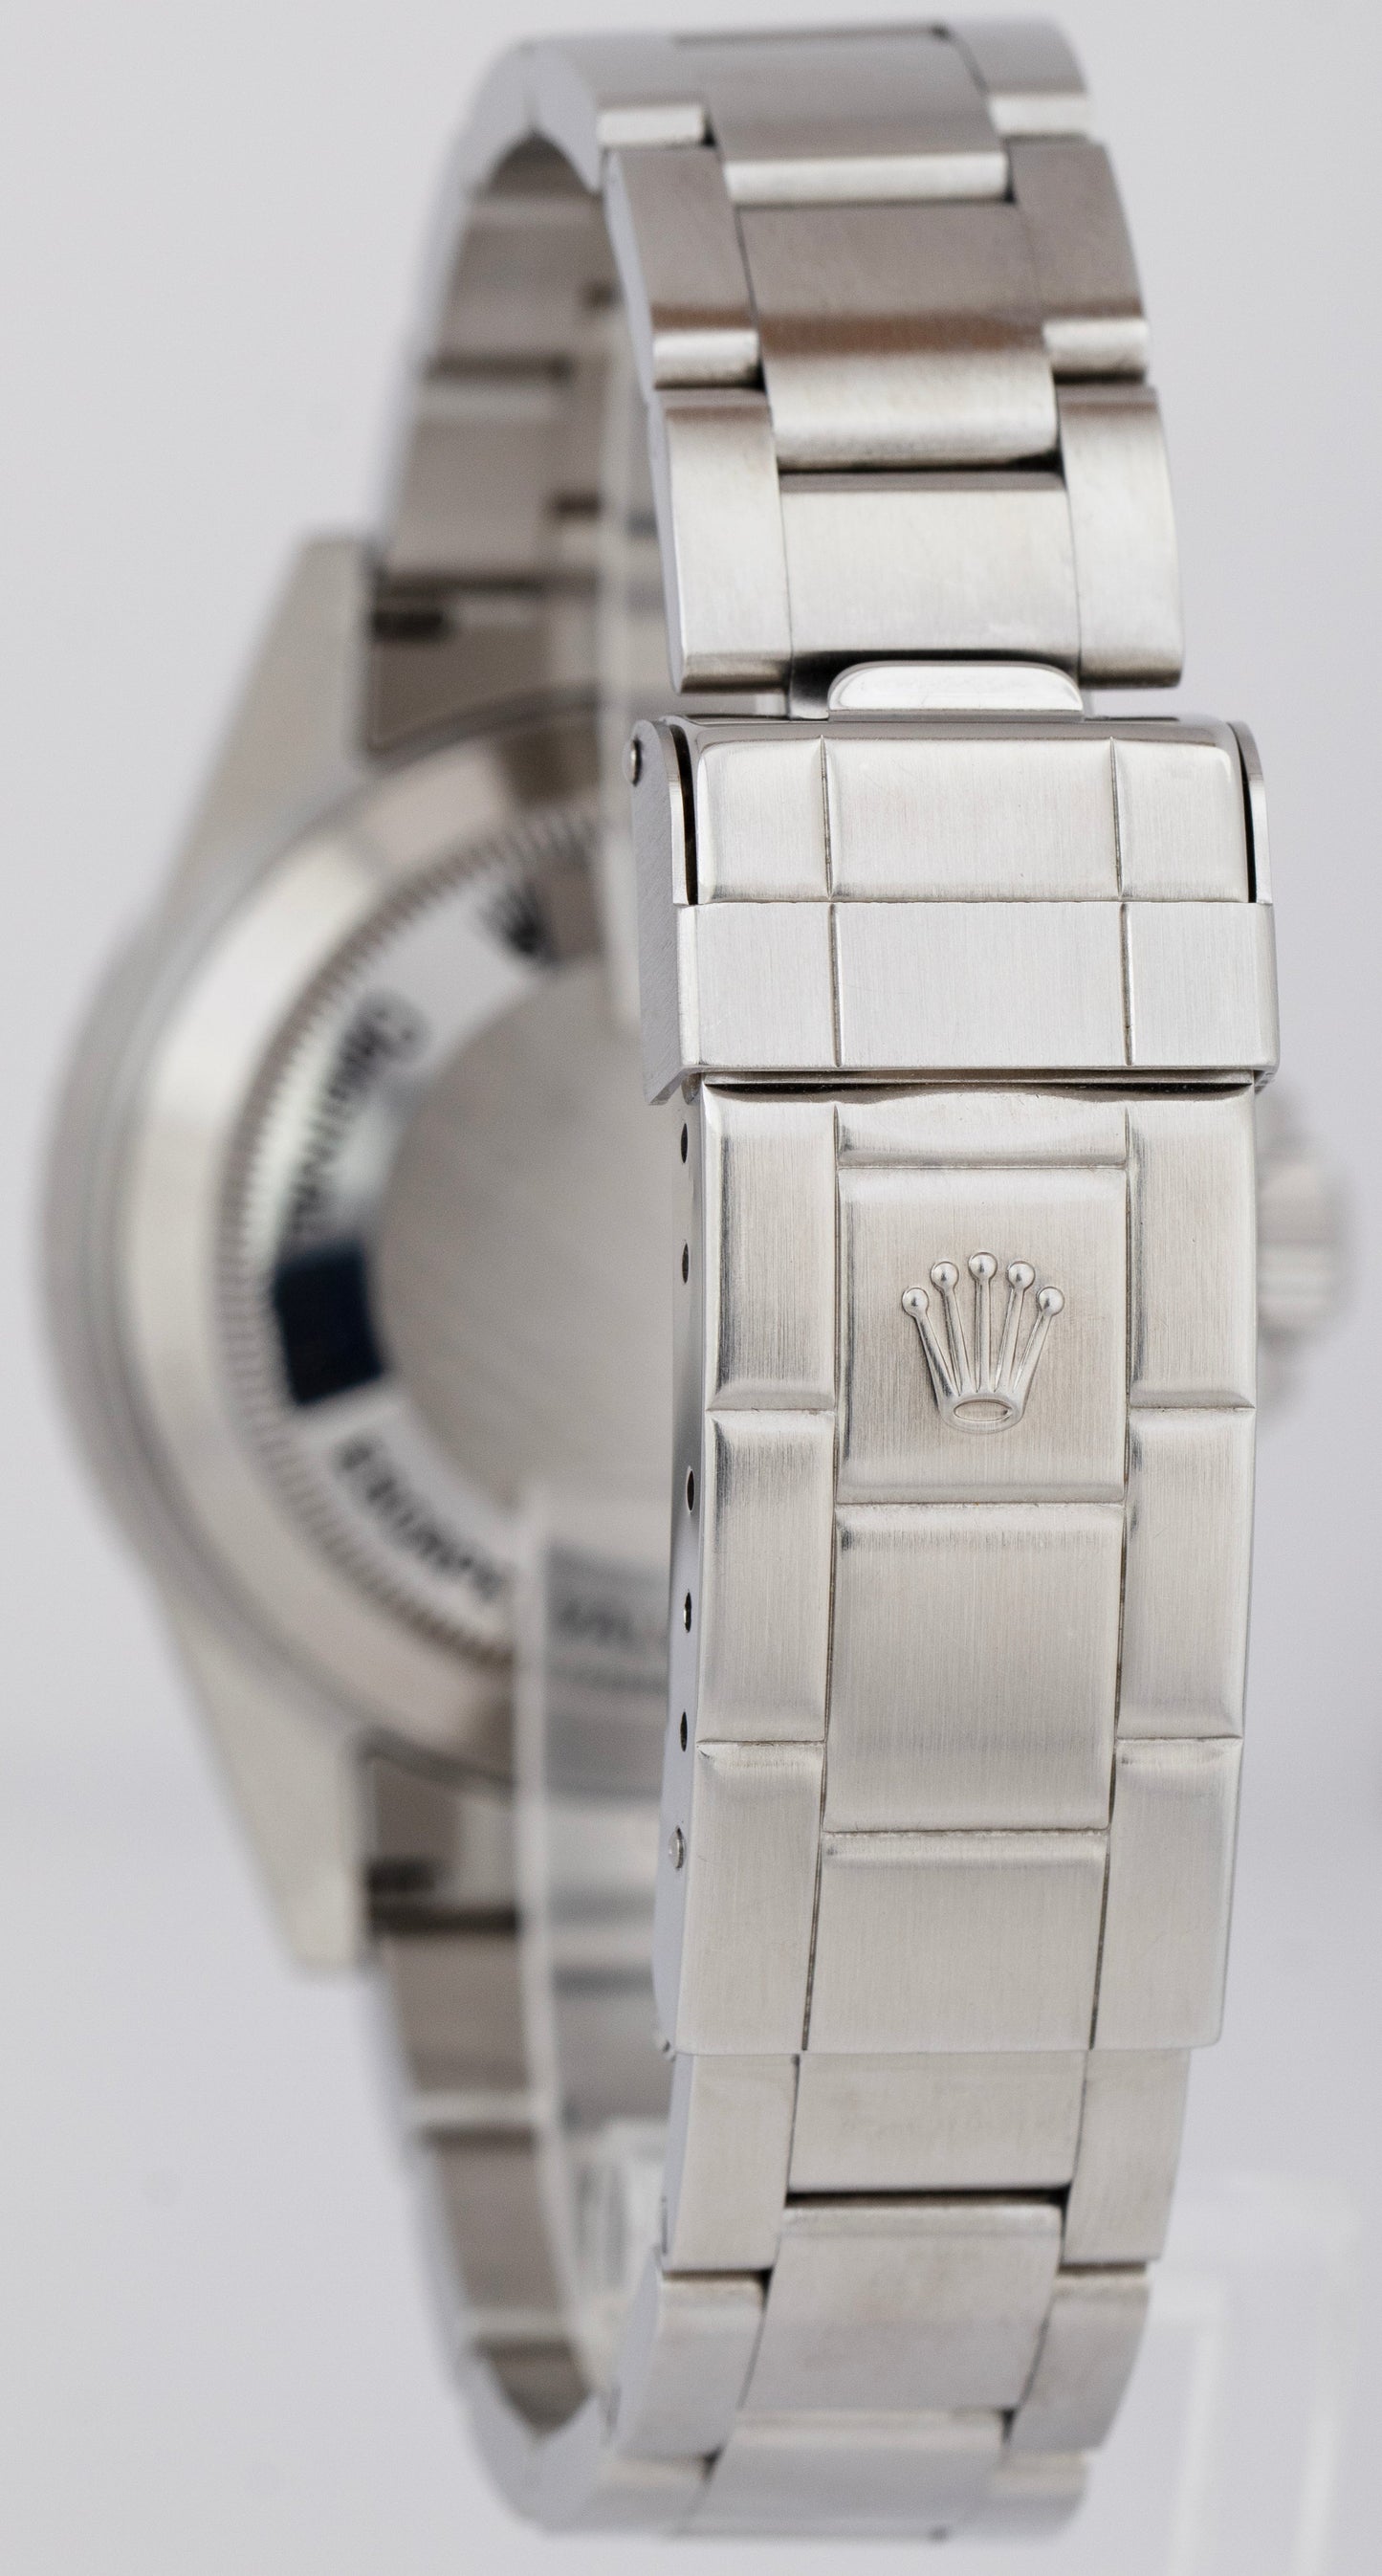 UNPOL. 2007 Rolex Sea-Dweller 16600 40mm Steel Black Automatic Watch PAPERS